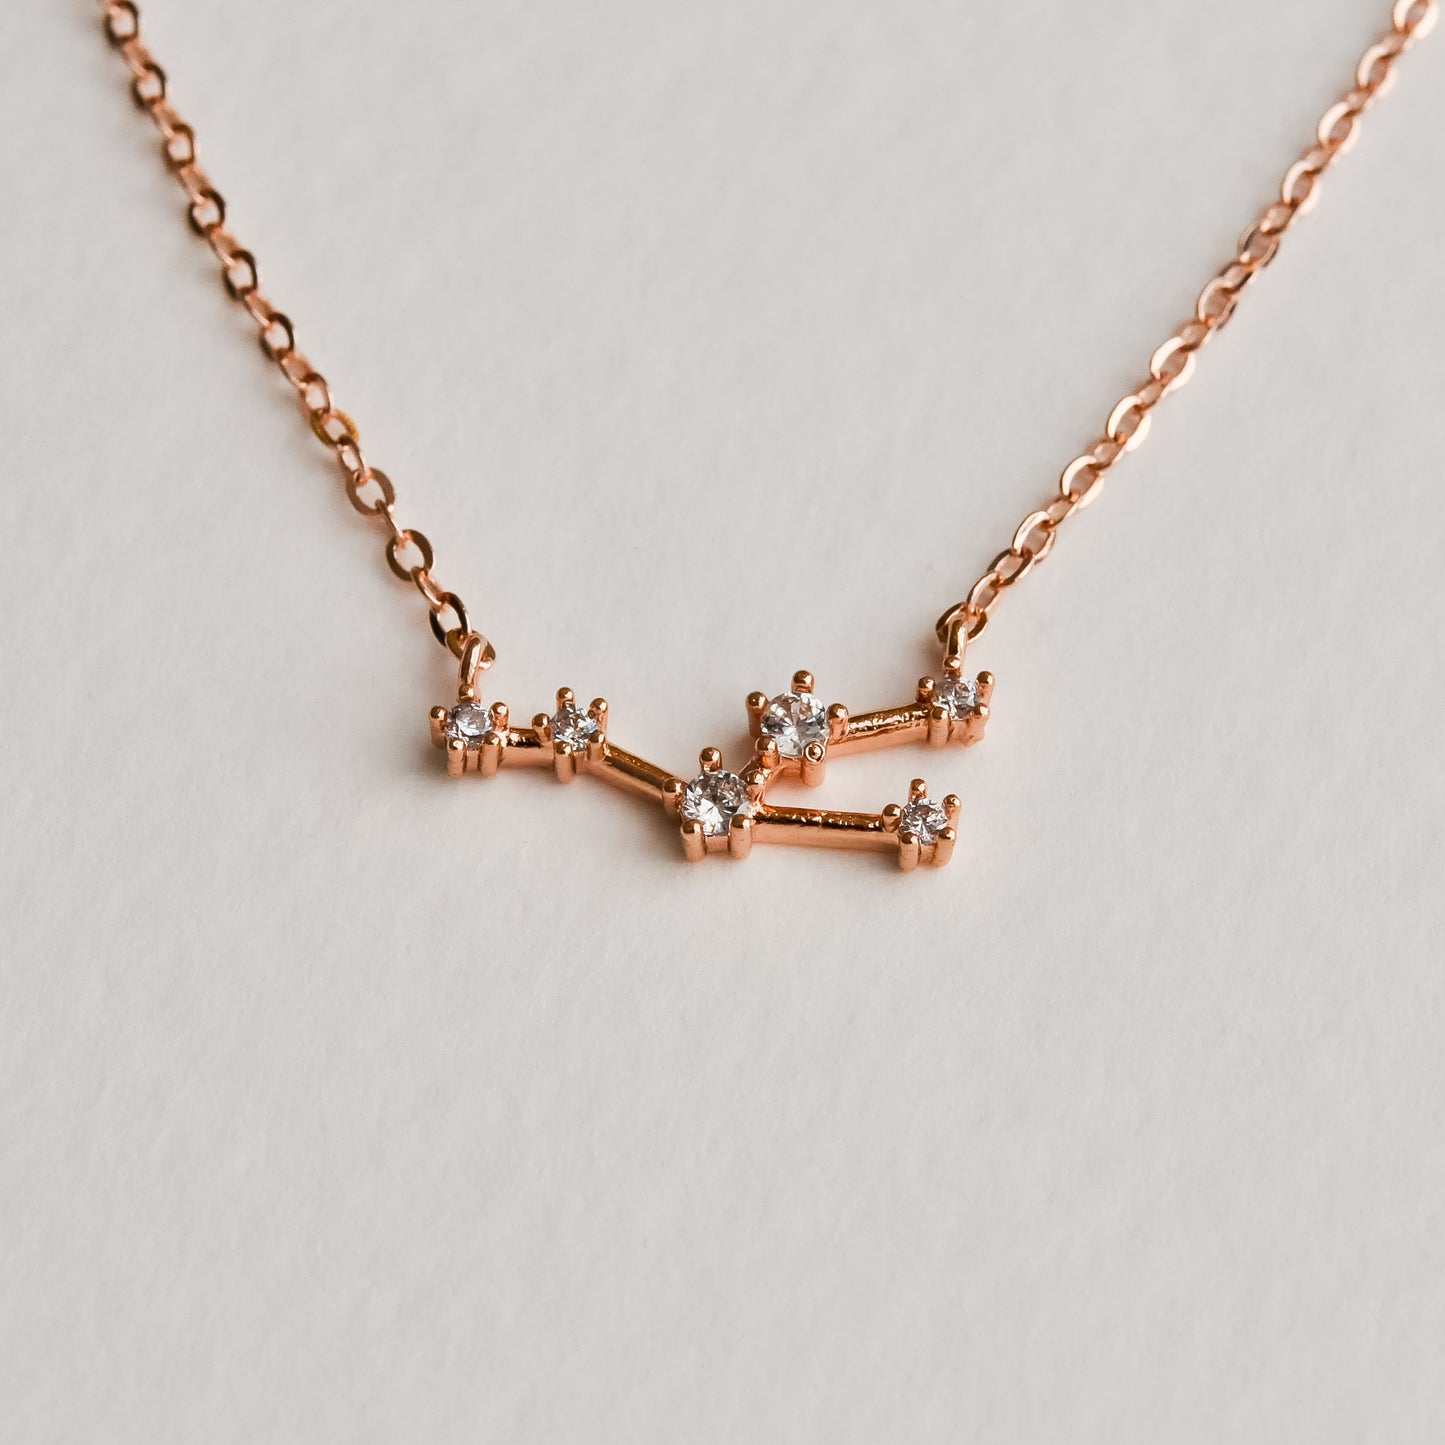 Taurus Constellation Necklace - Aloraflora Jewelry